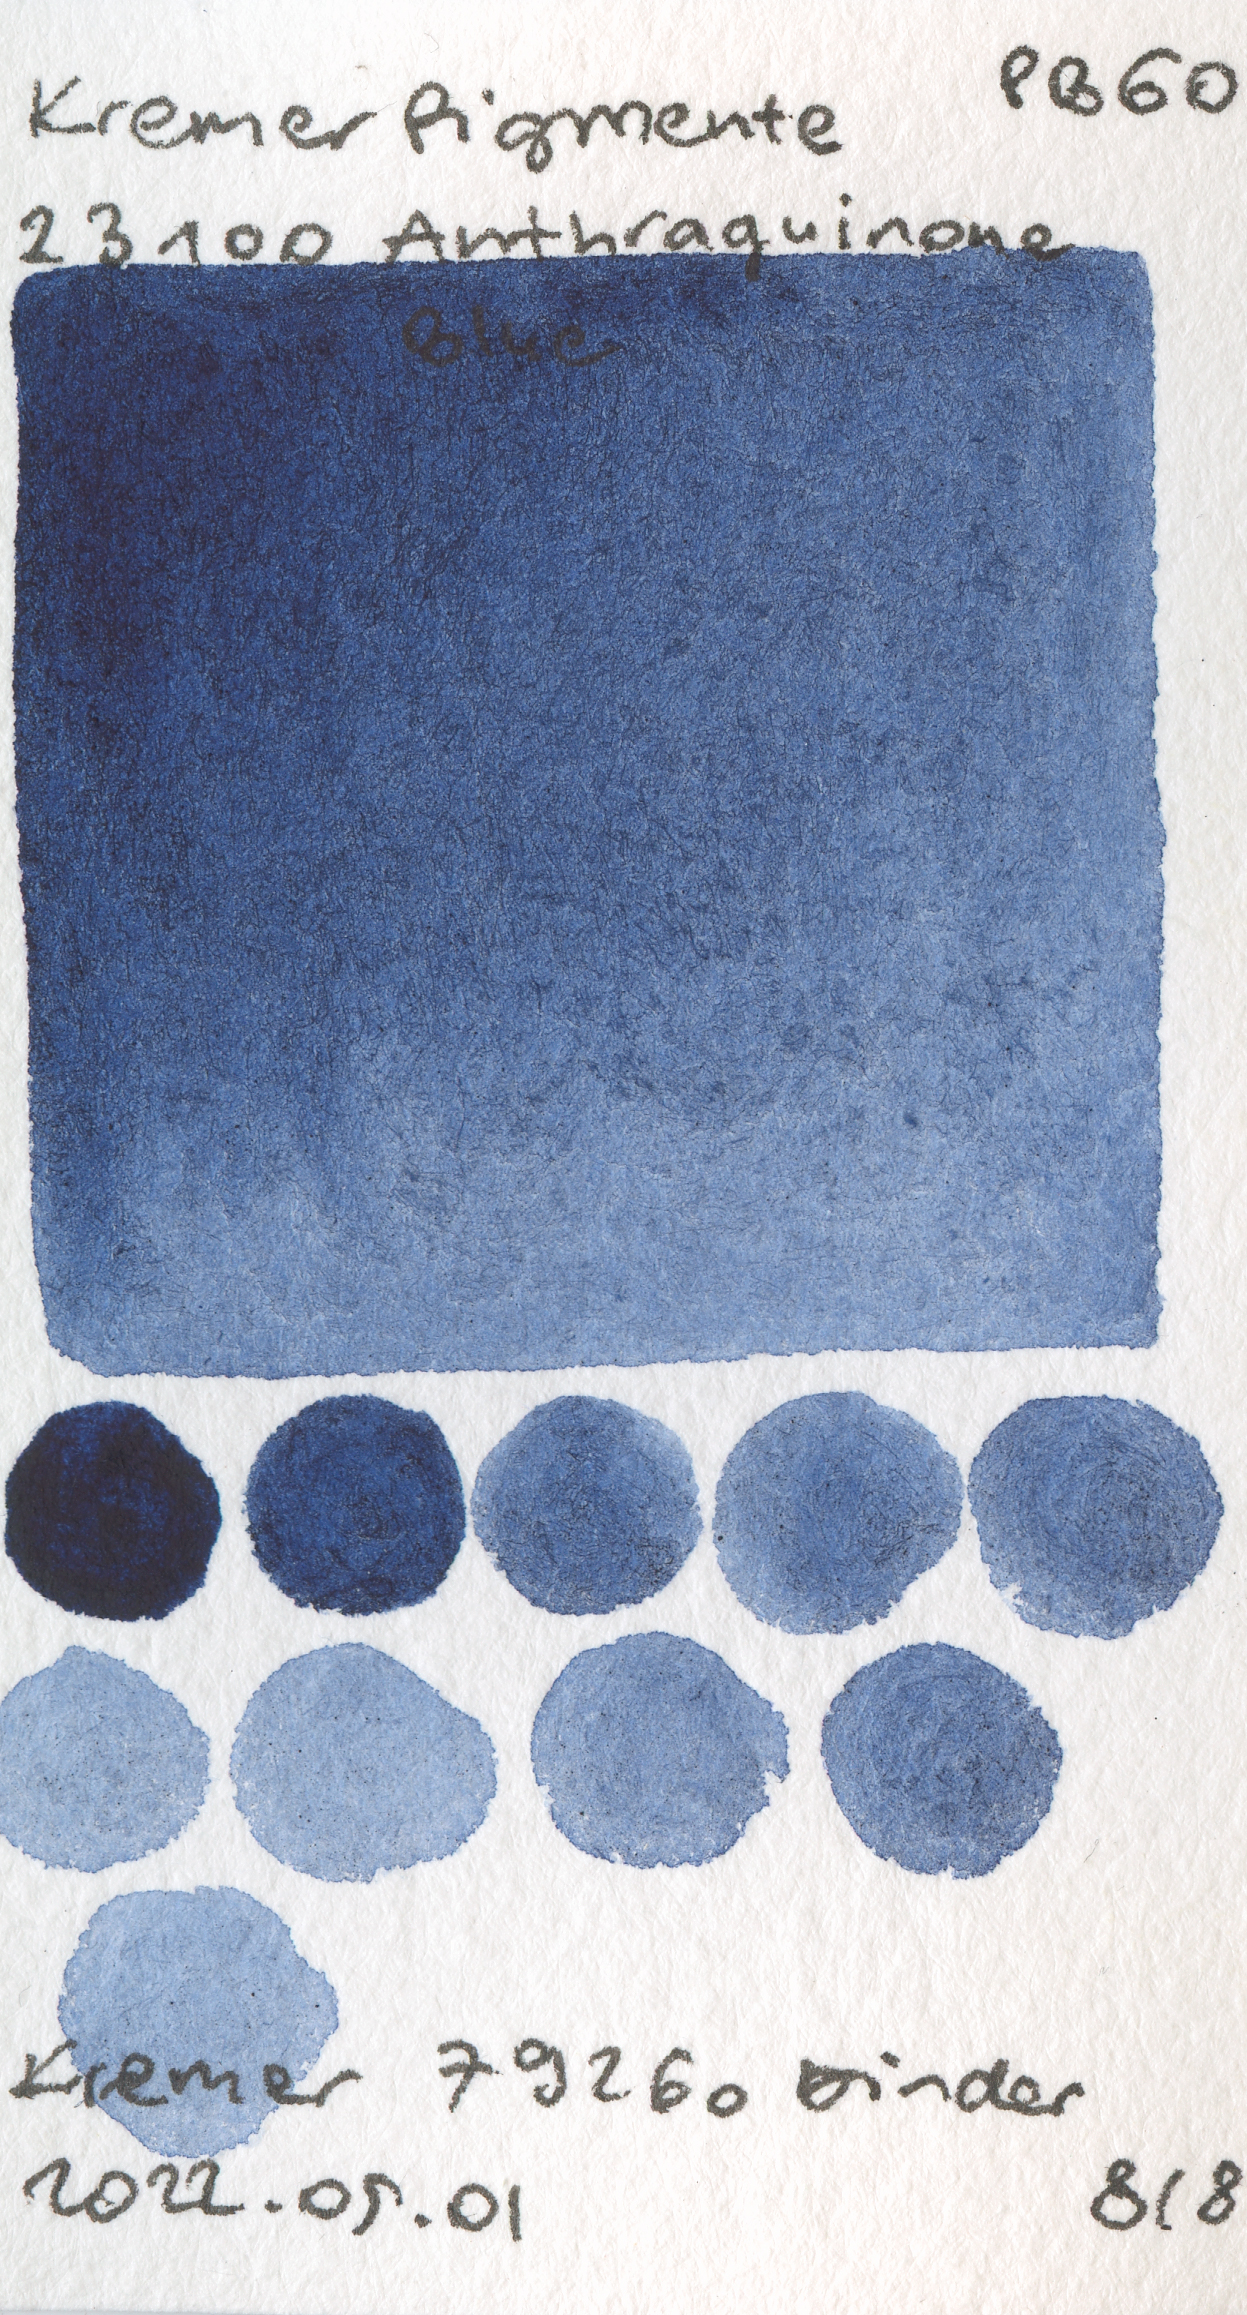 Kremer Pigmente Pigment 23100 Anthraquinone Blue PB60 watercolor swatch